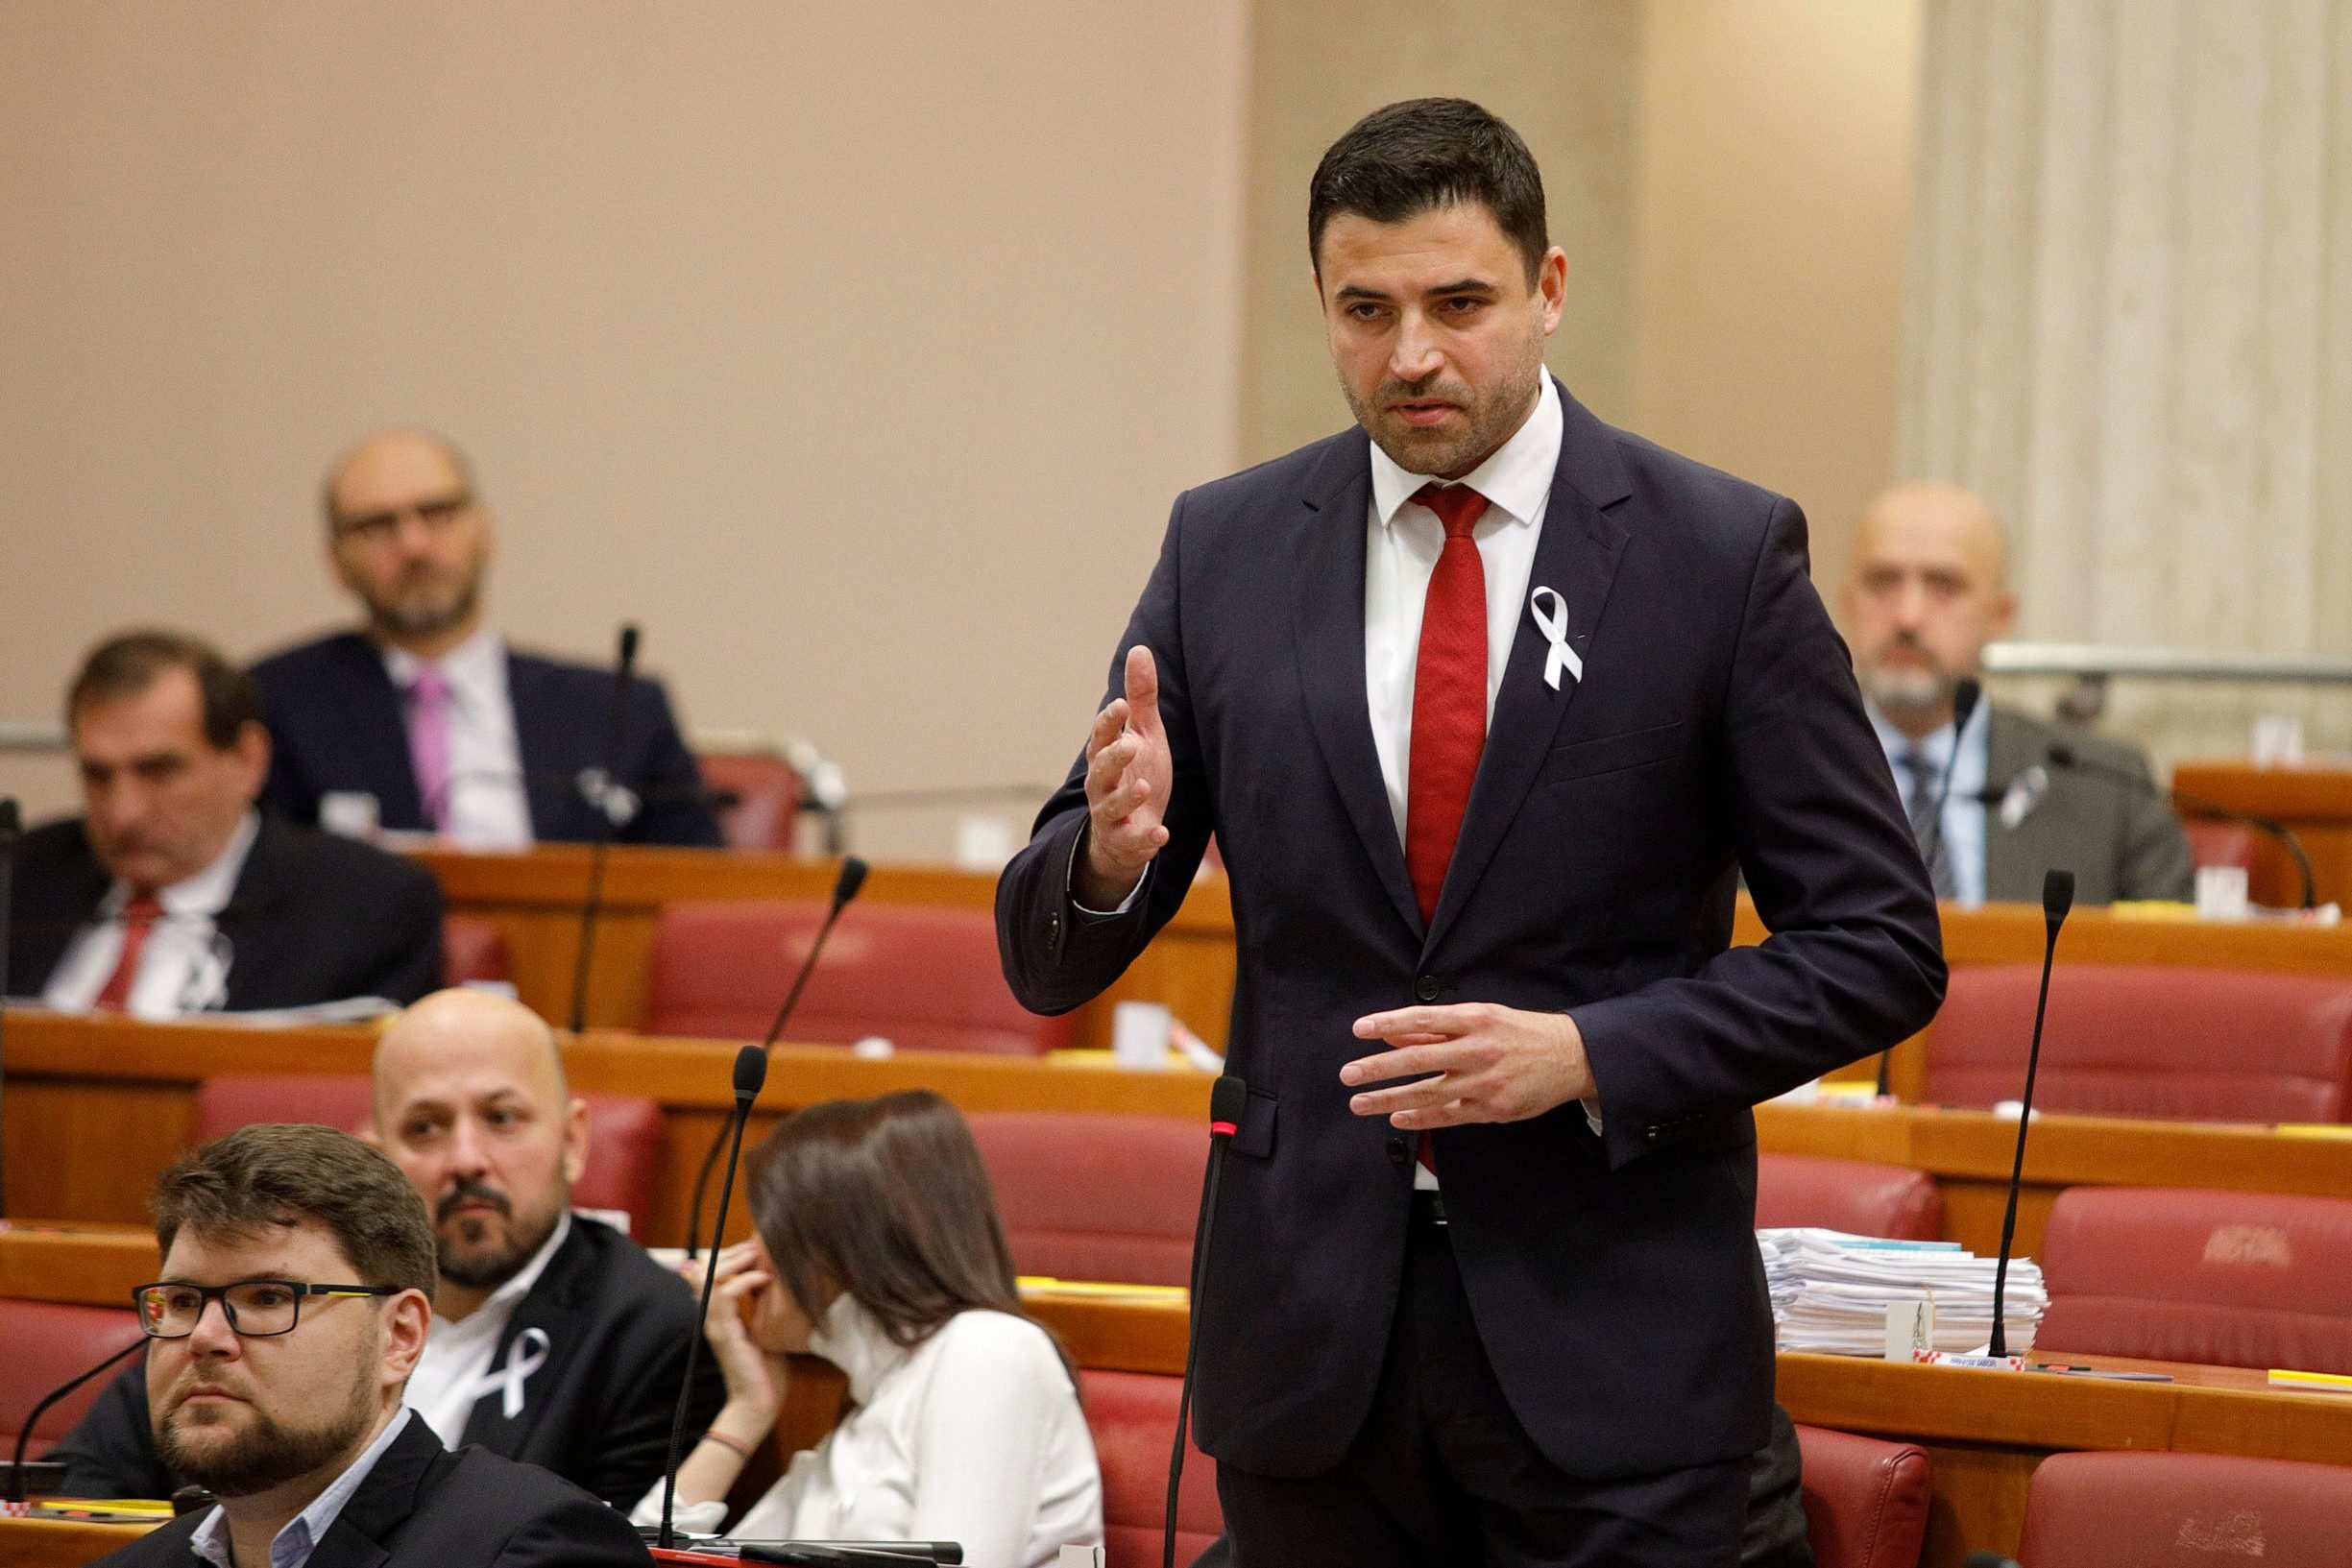 Davor Bernardic, SDP chief